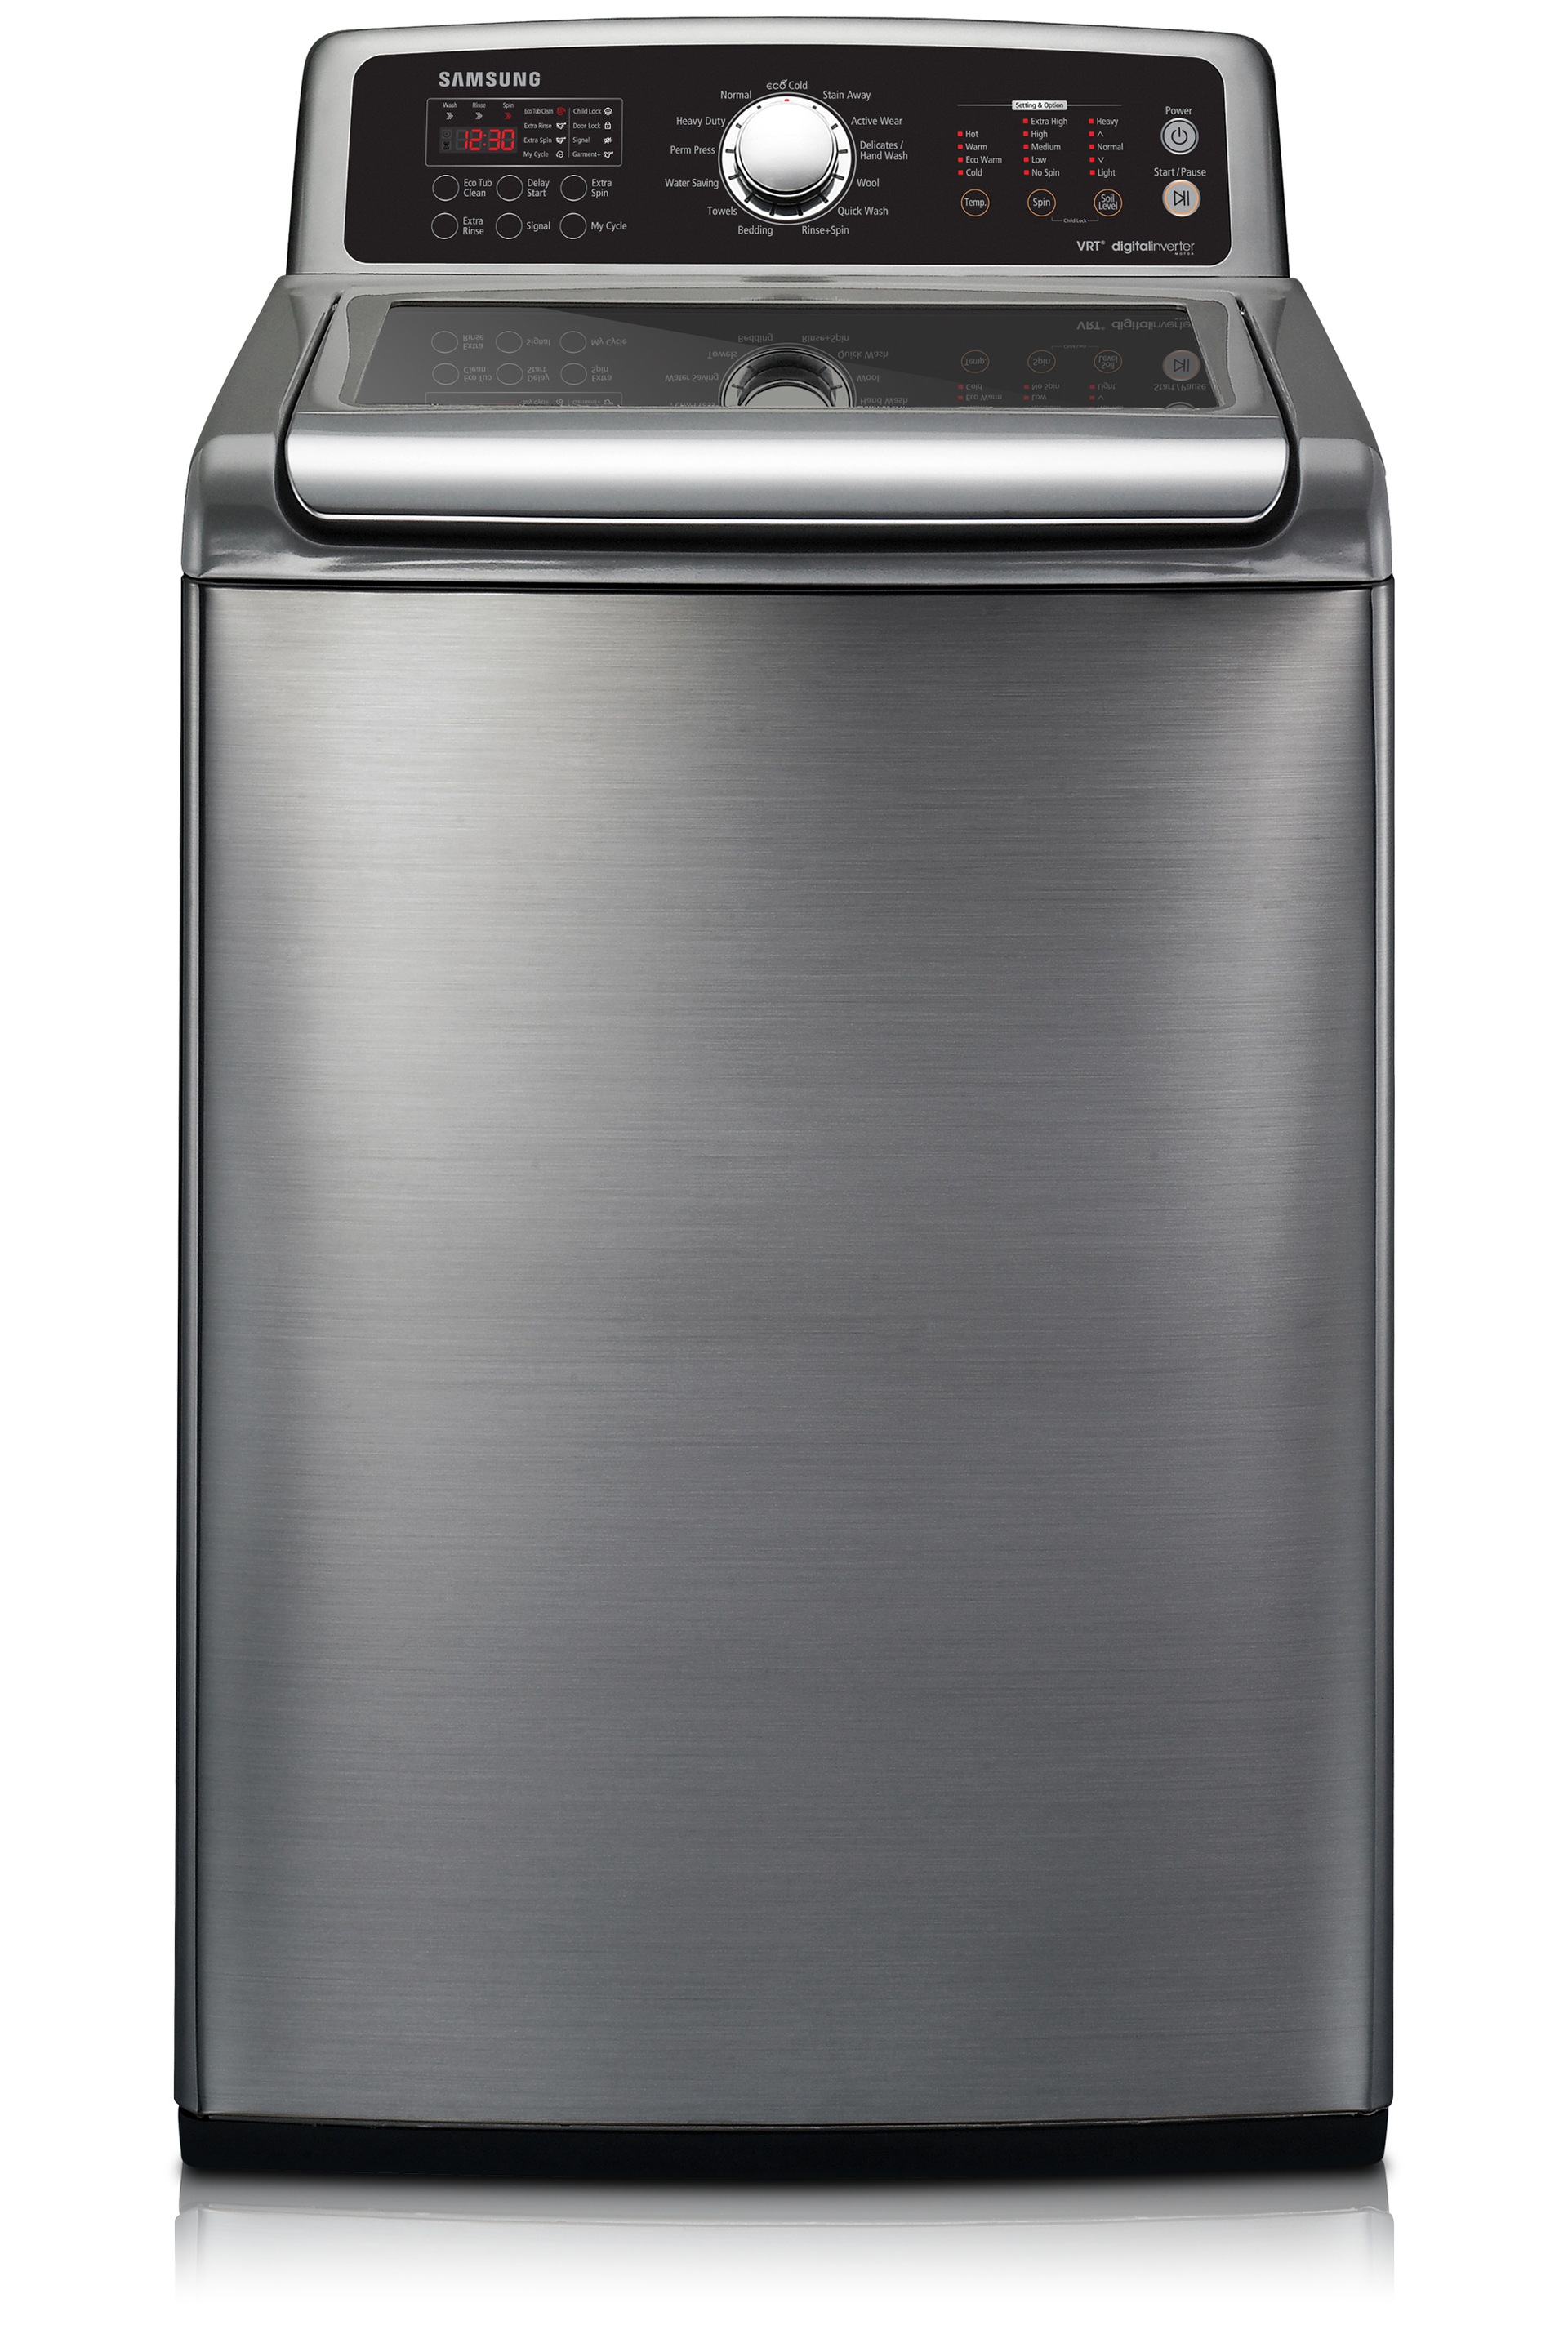 Samsung Washing Machine, 10kg capacity, Top Loader Washing